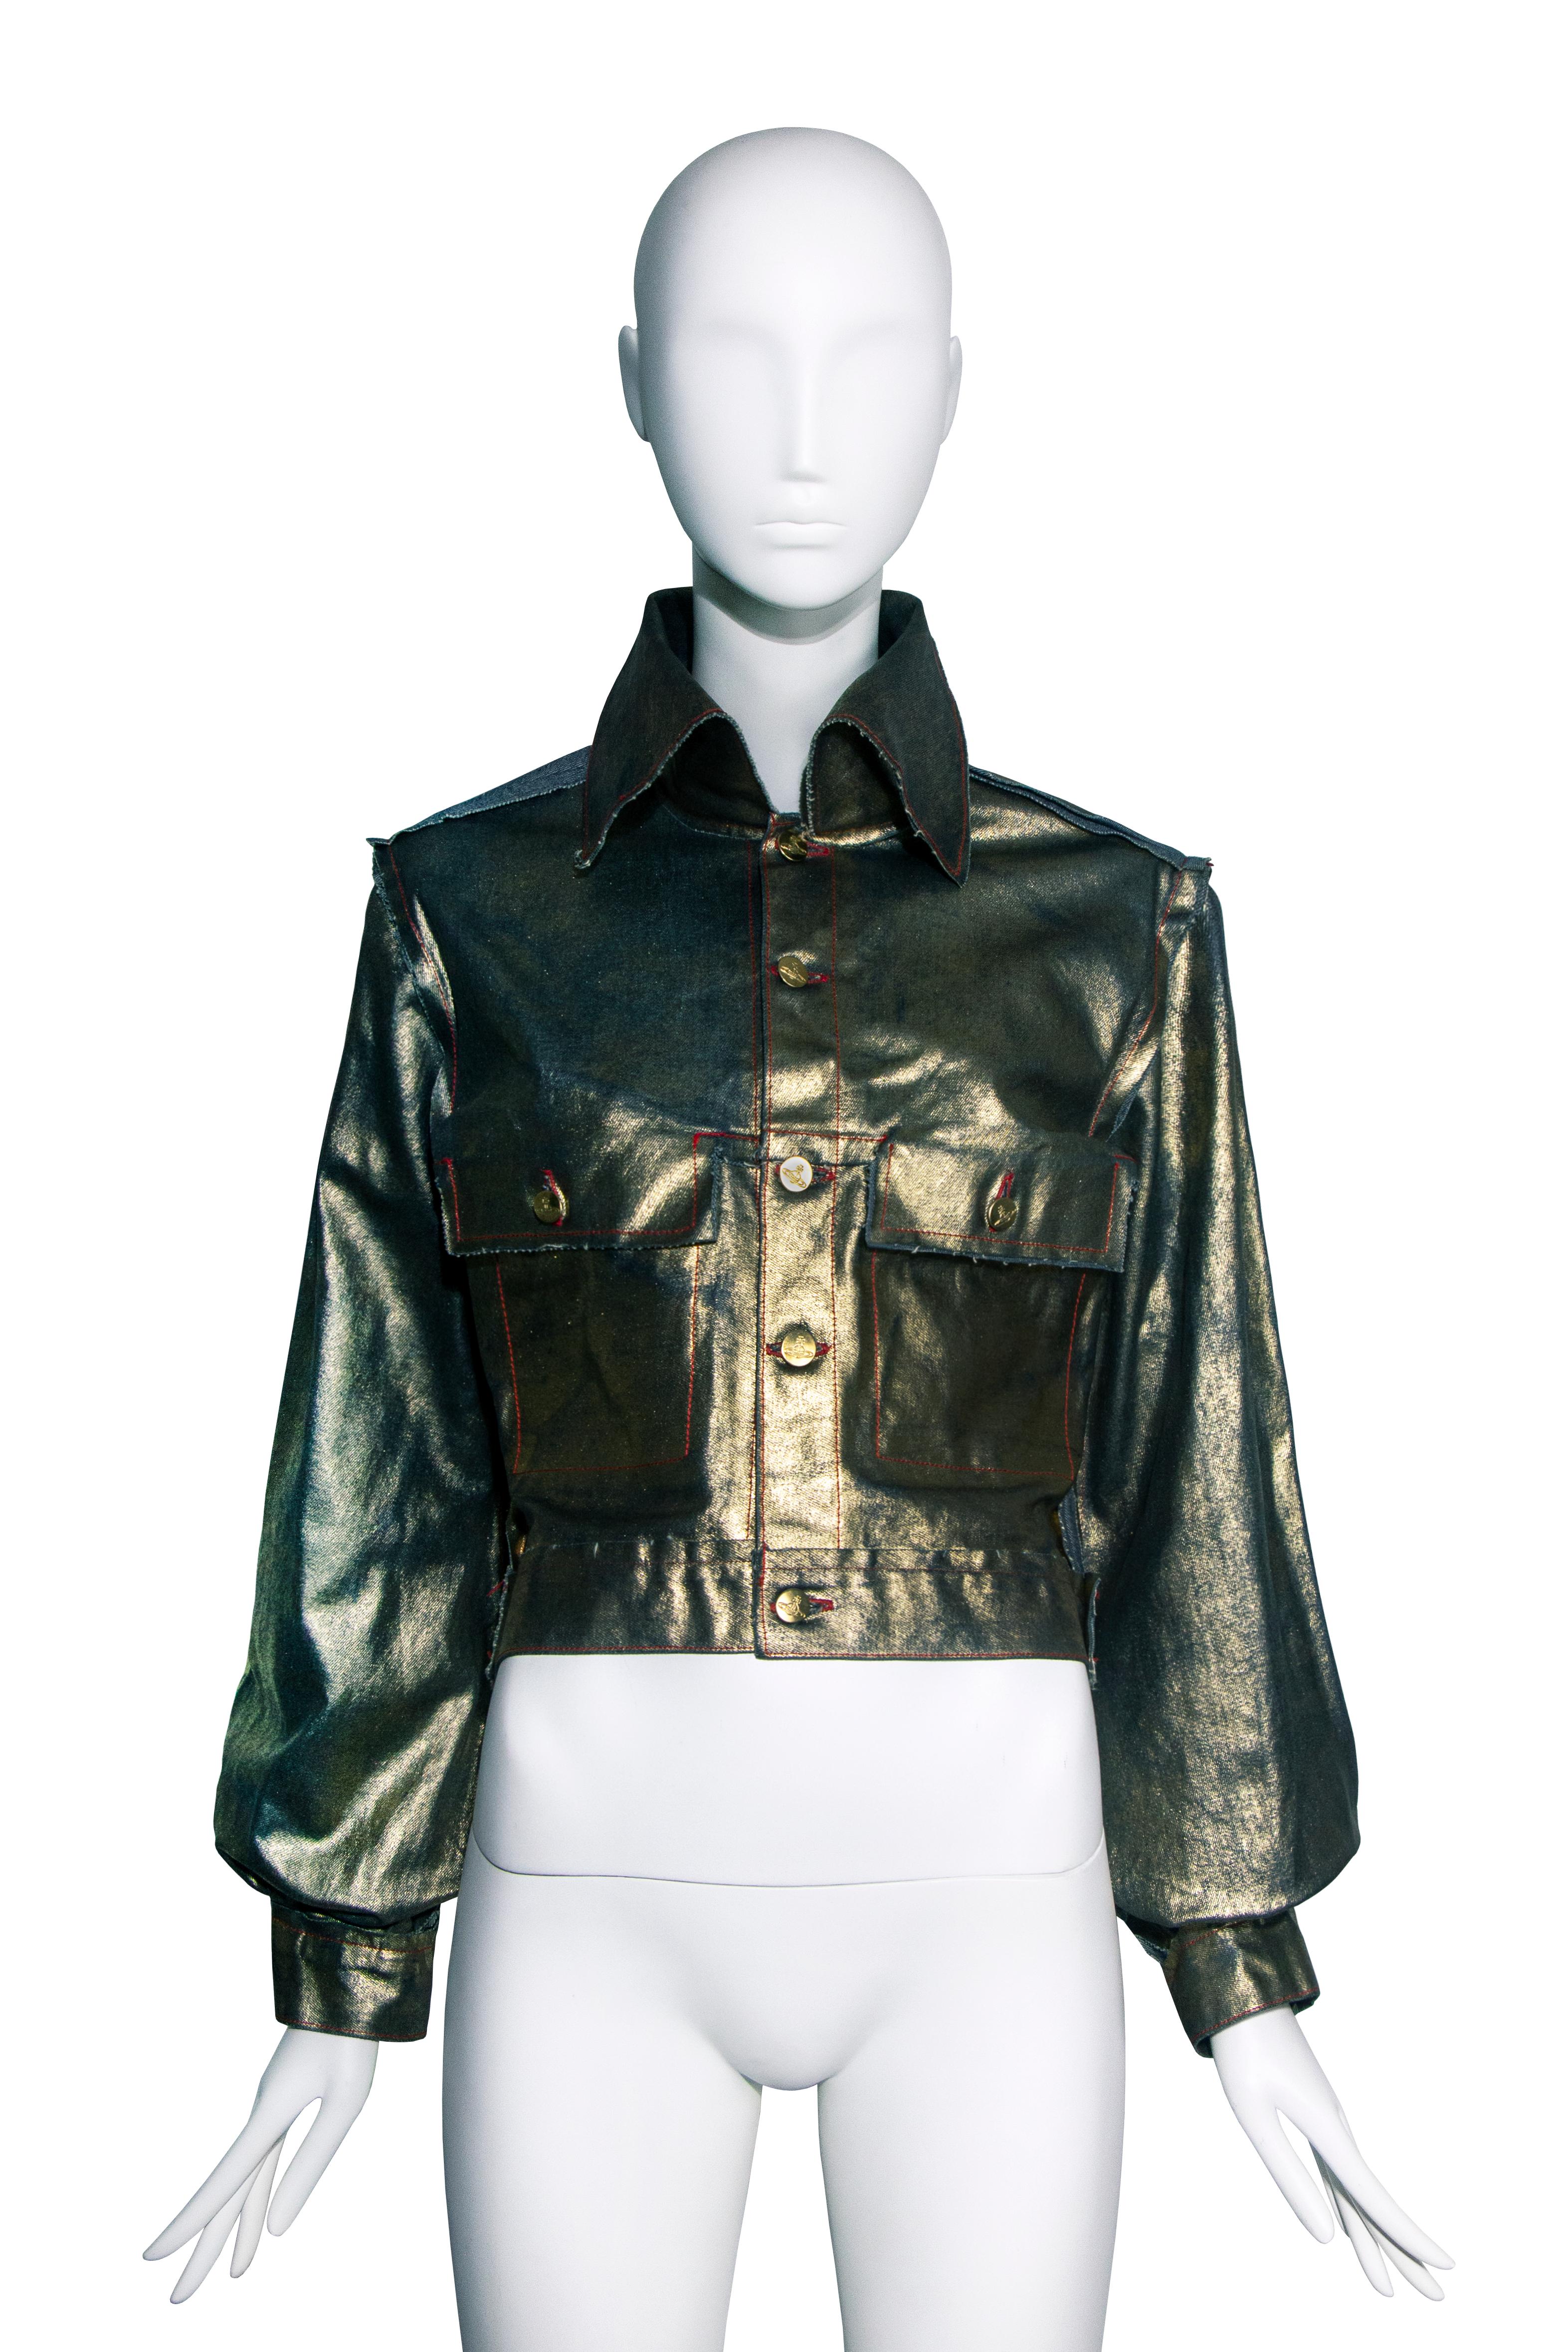 Vivienne Westwood 'Grand Hotel' metallic gold painted denim jacket